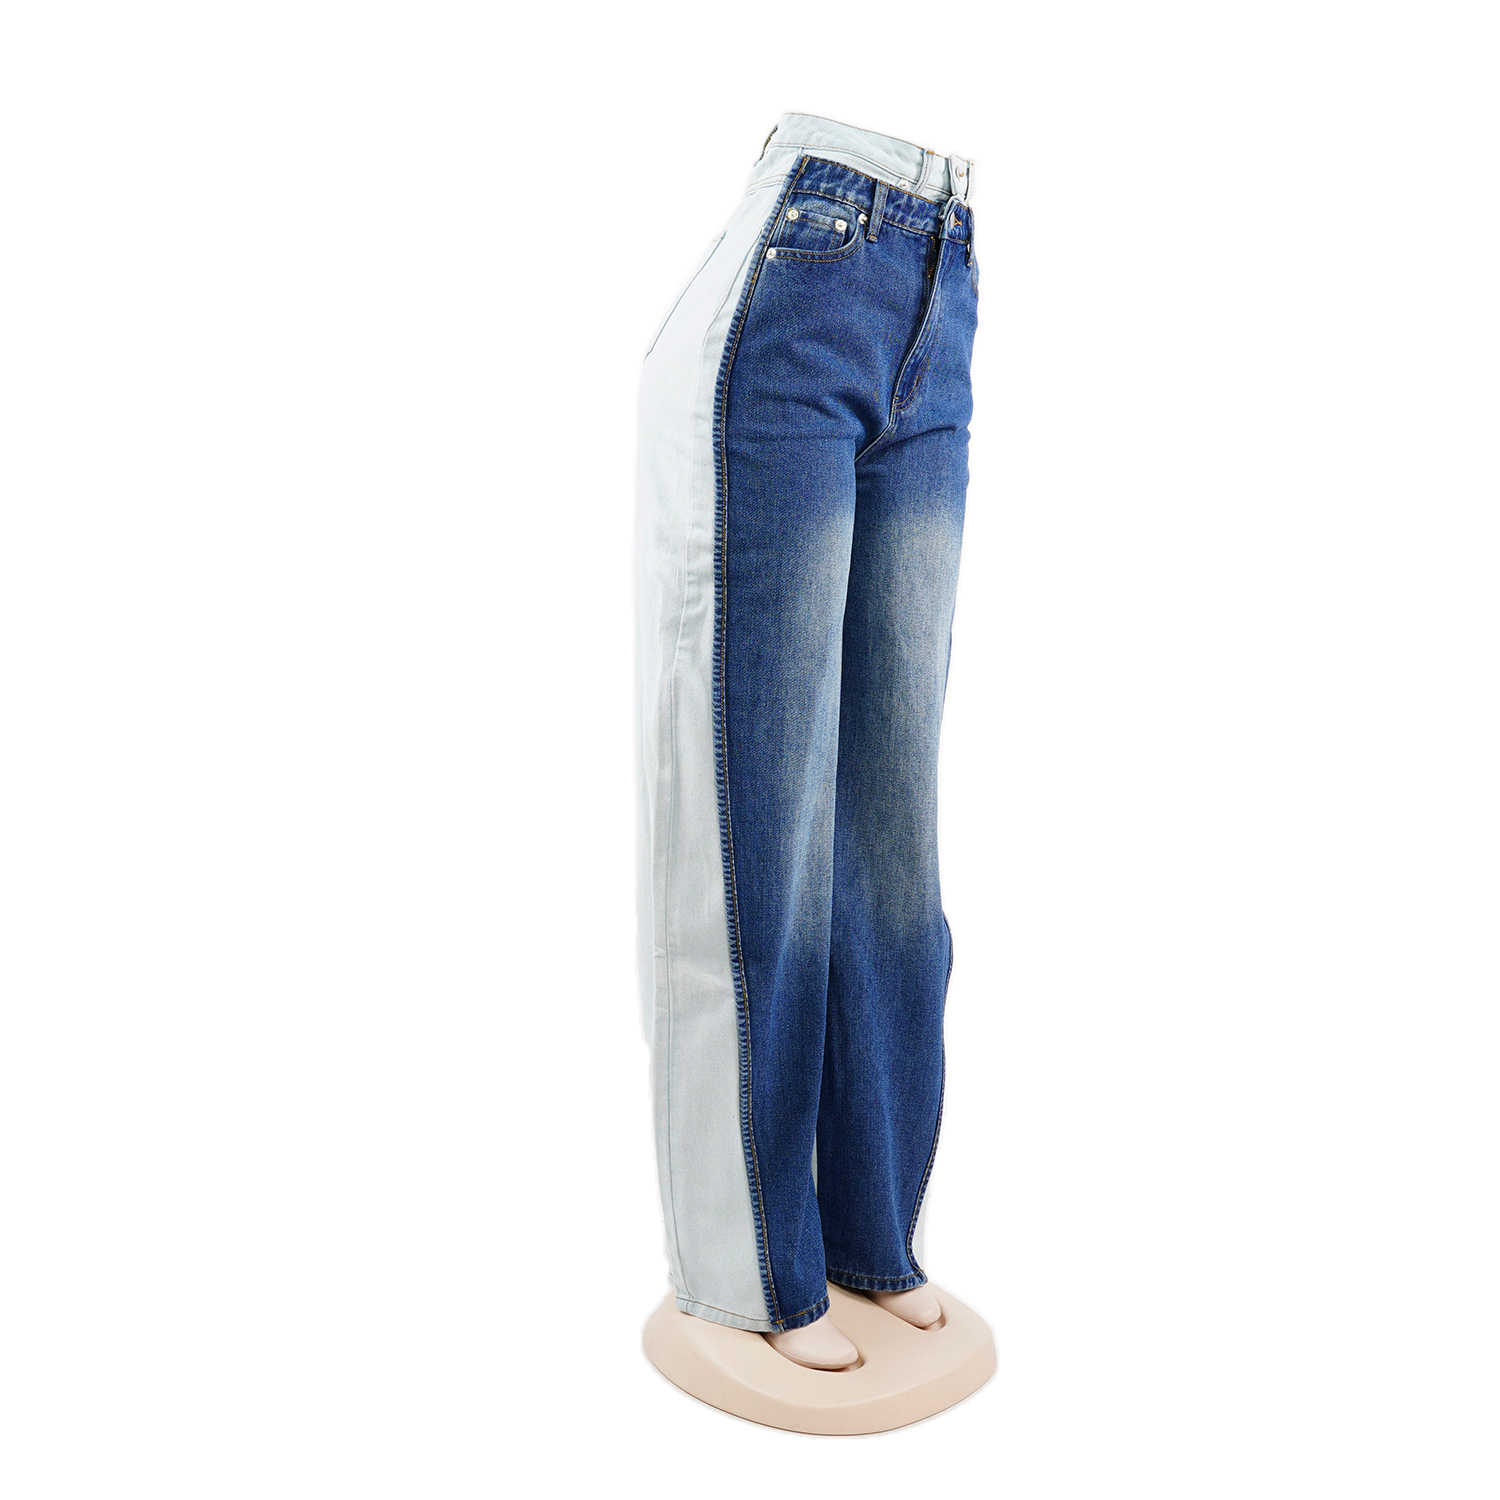 SKYKINGDOM fashion streetwear jeans two tone mix colors denim jeans lady